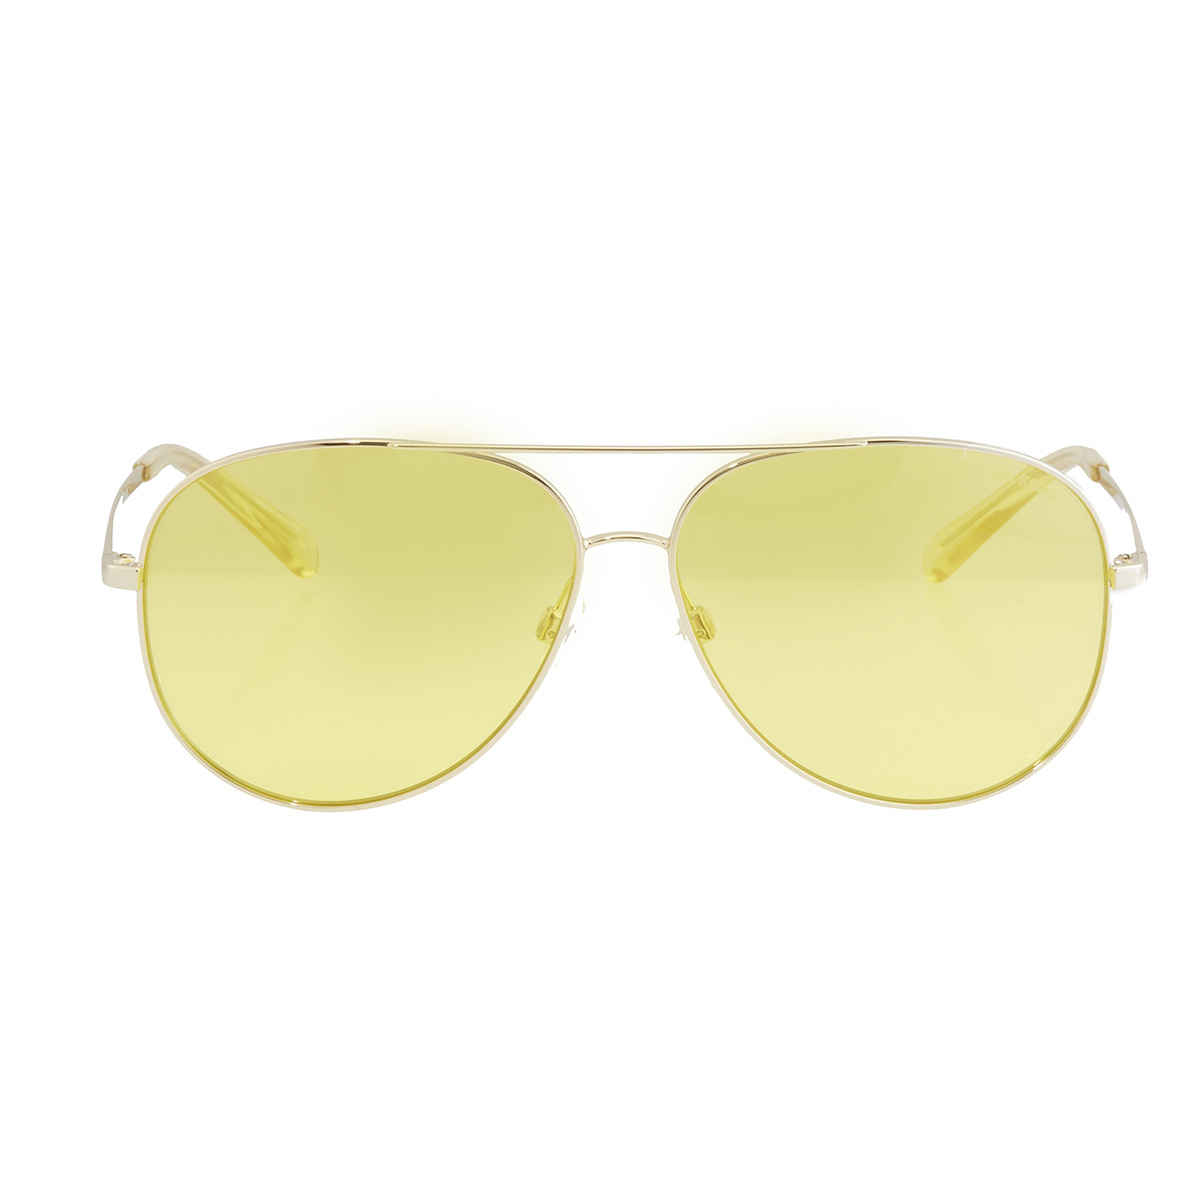 Michael Kors Kendall Golden Yellow Solid Pilot Ladies Sunglasses MK5016 101485 60, Women's Sunglasses - image 2 of 2